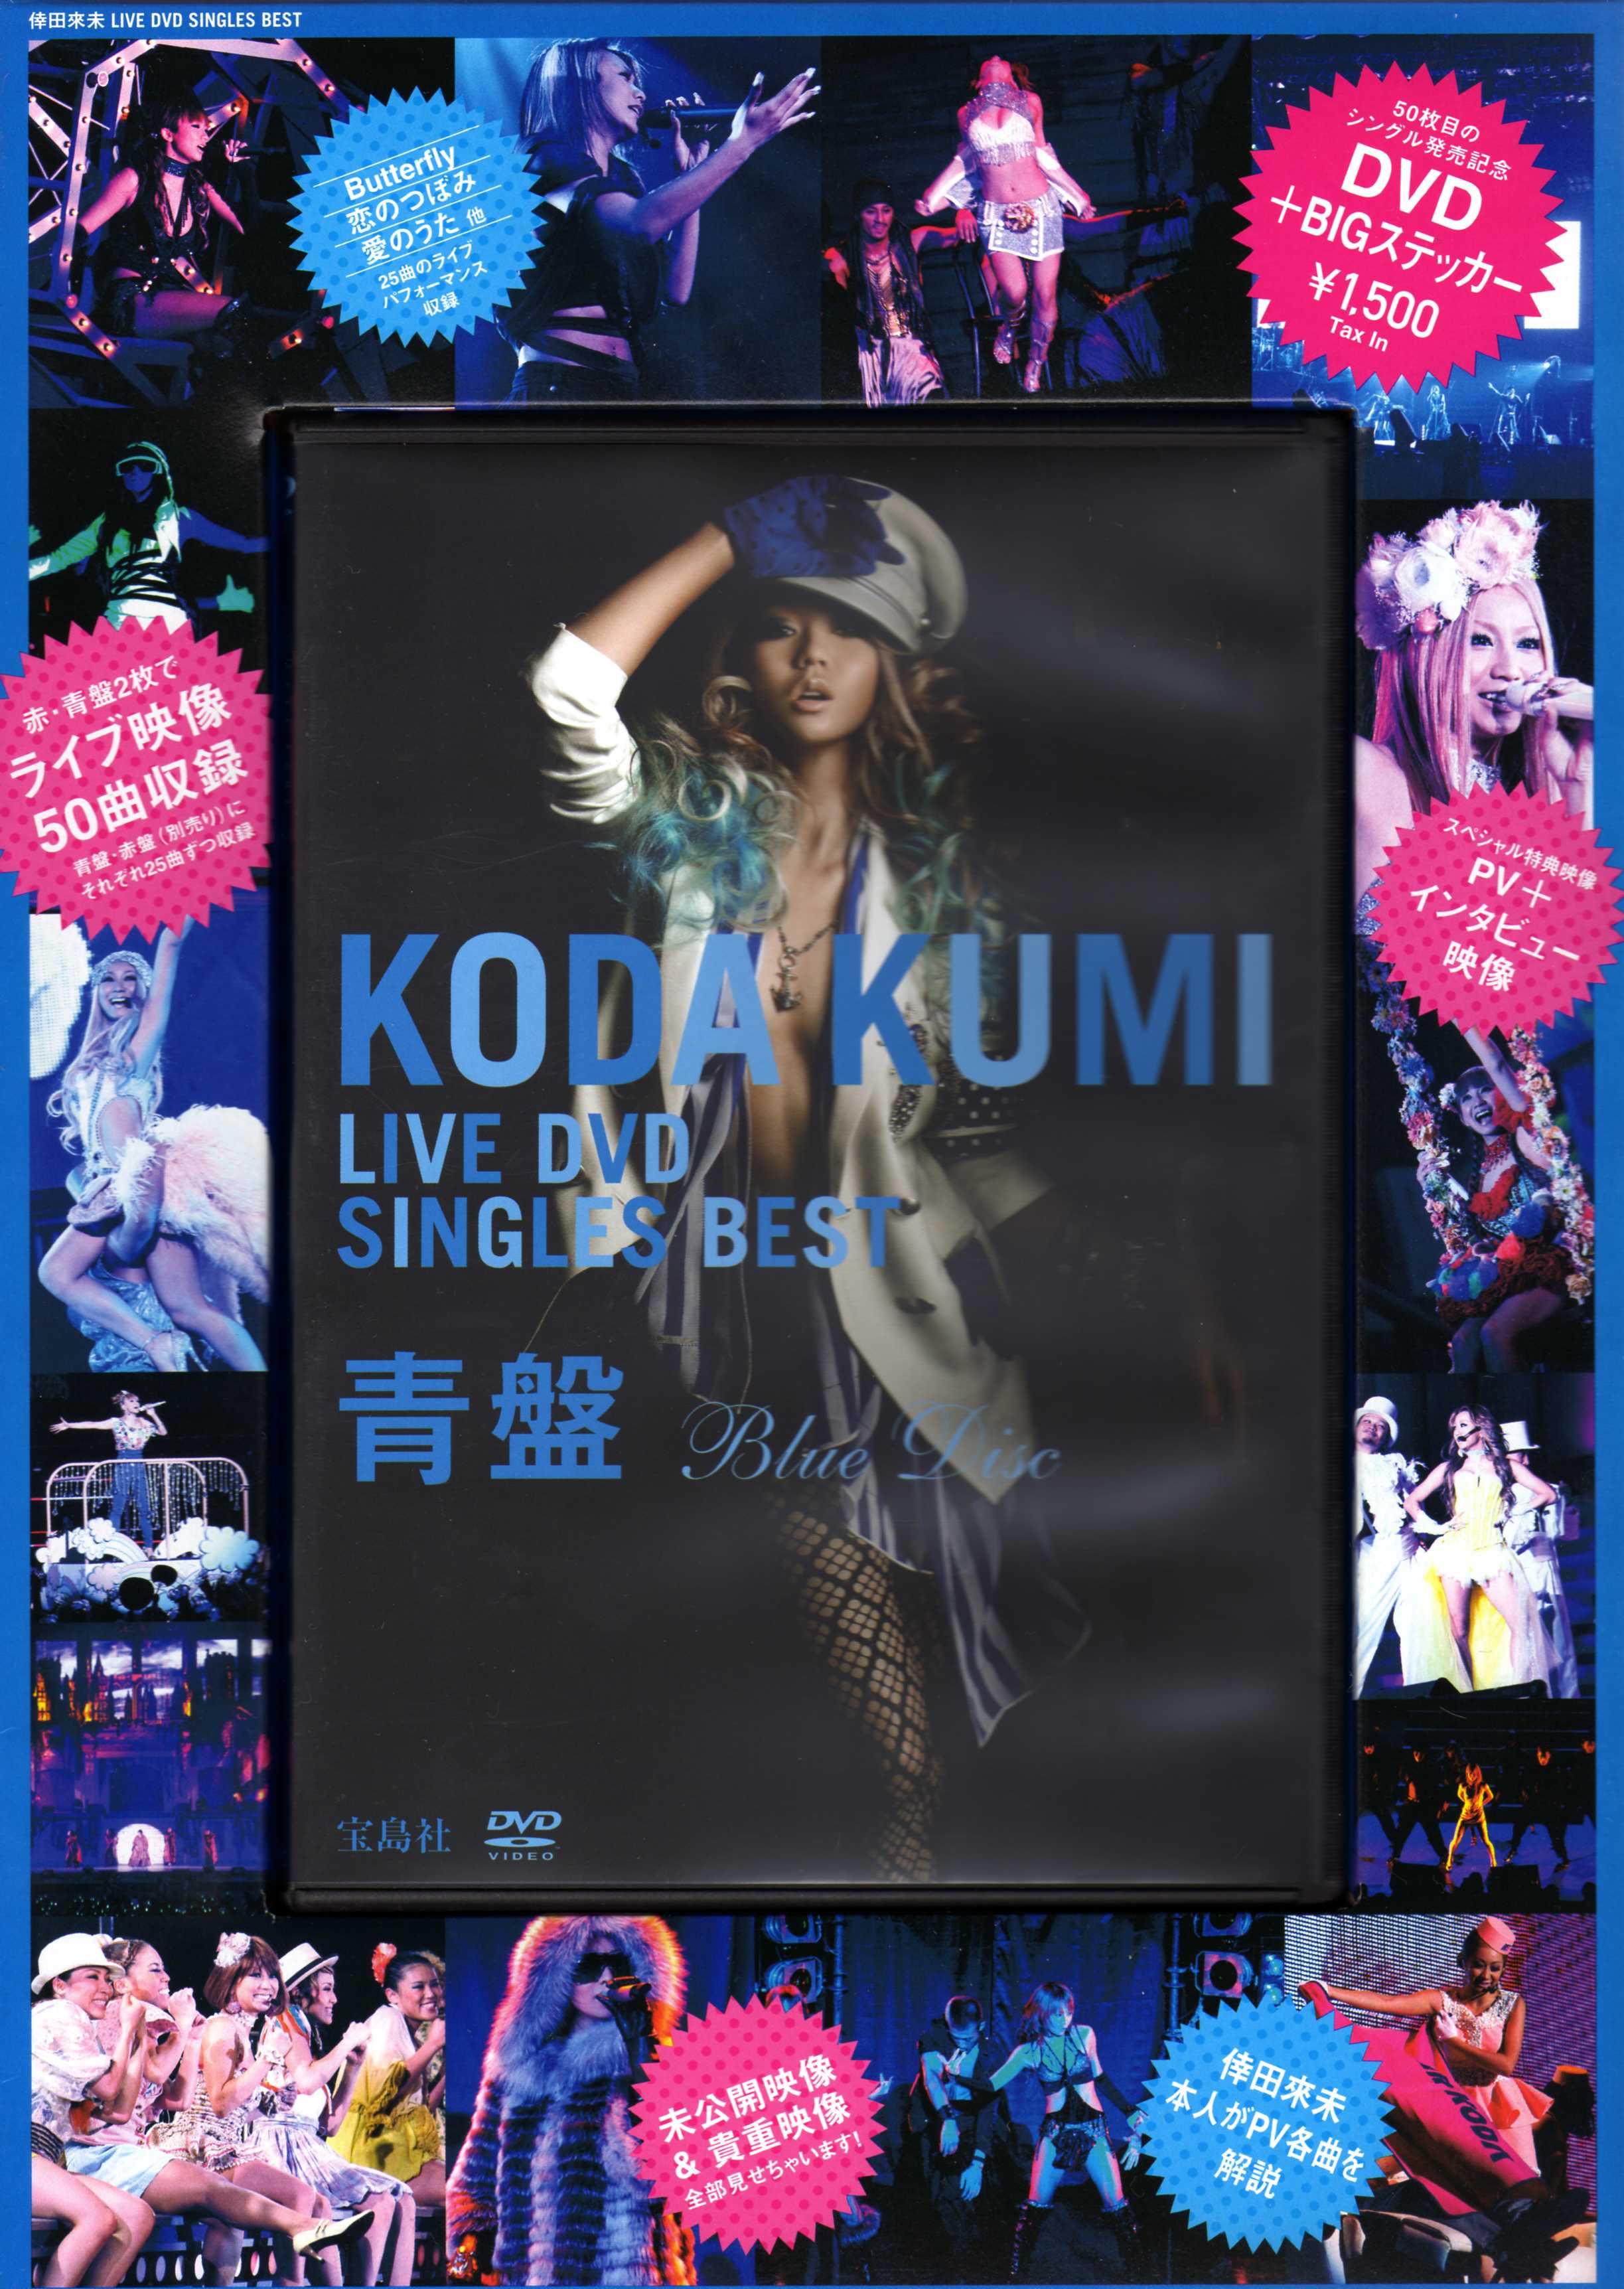 LIVE DVD SINGLES BEST -BLUE- (DVD)